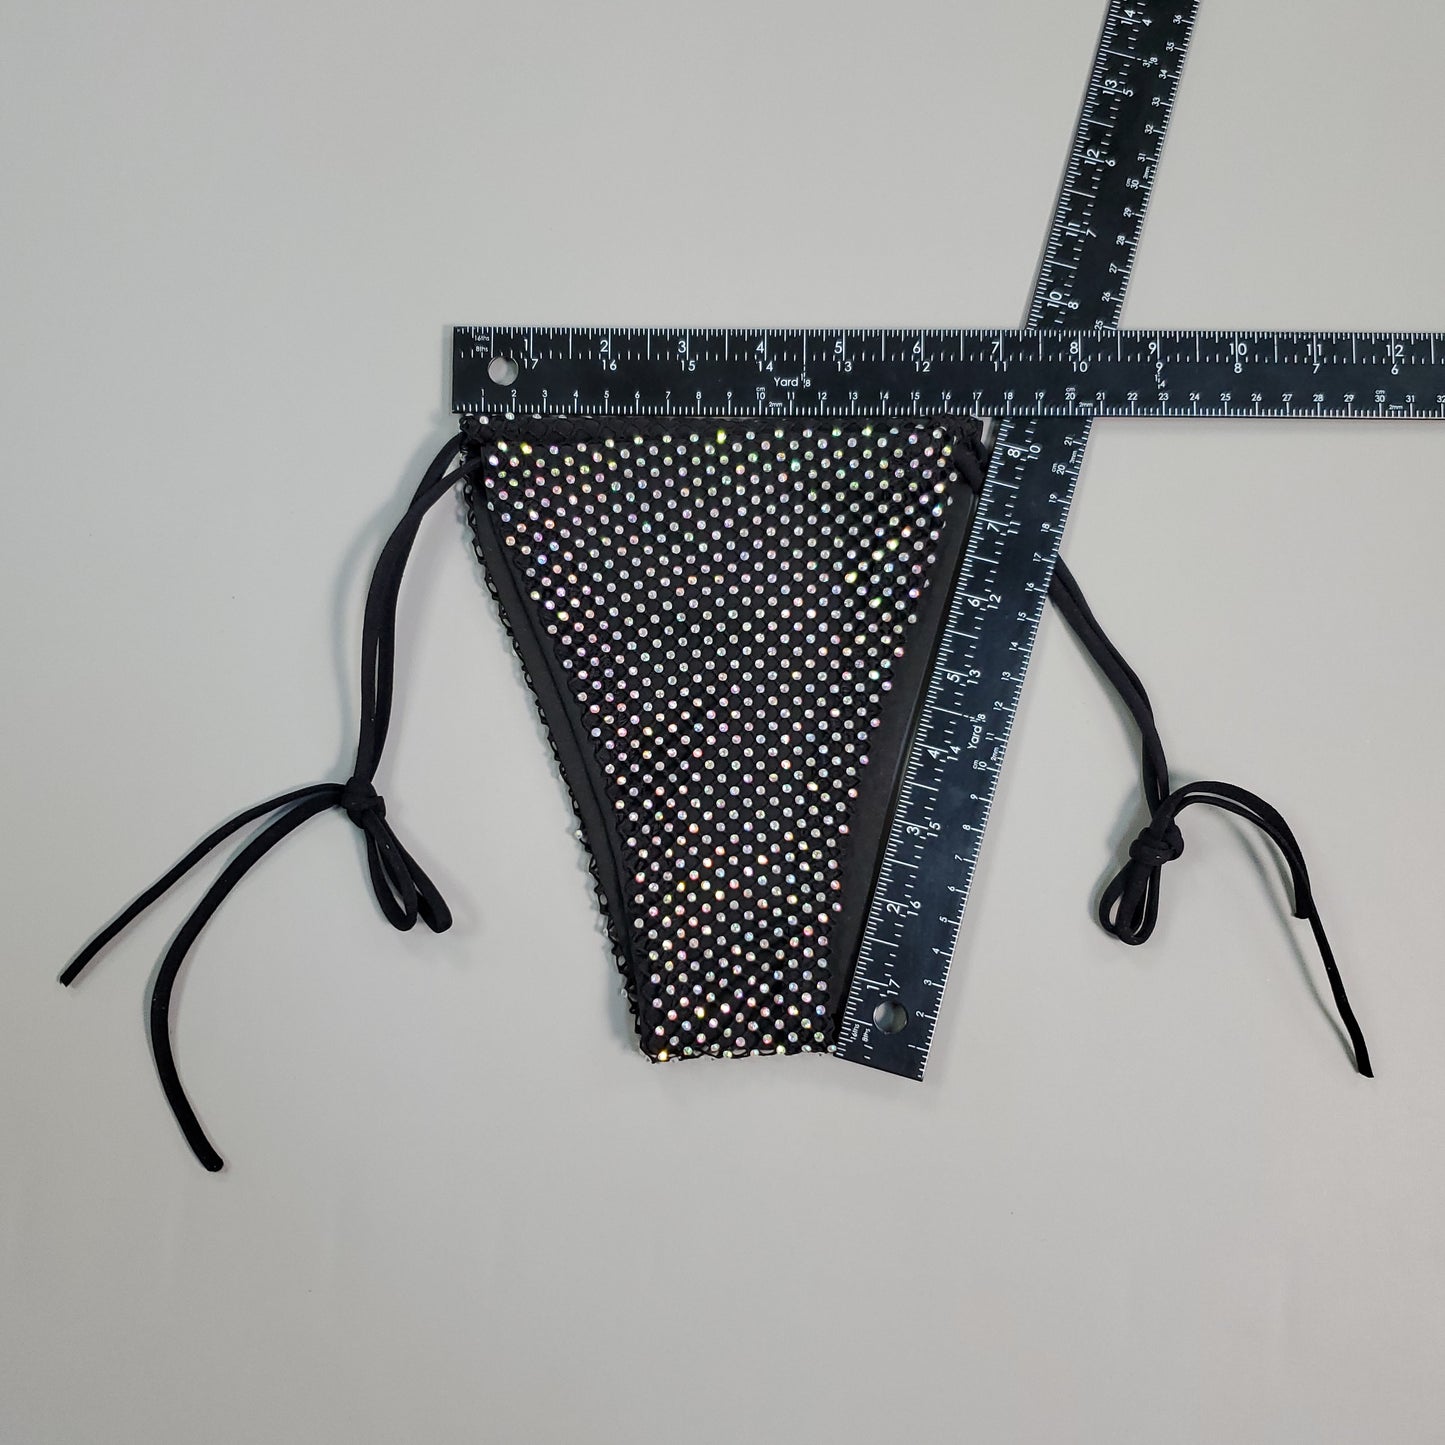 NEVA NUDE Shiney Hiney Iridescent Black Crystal High Waisted Pantie Lingerie JBOT-BLA-NKS (New)